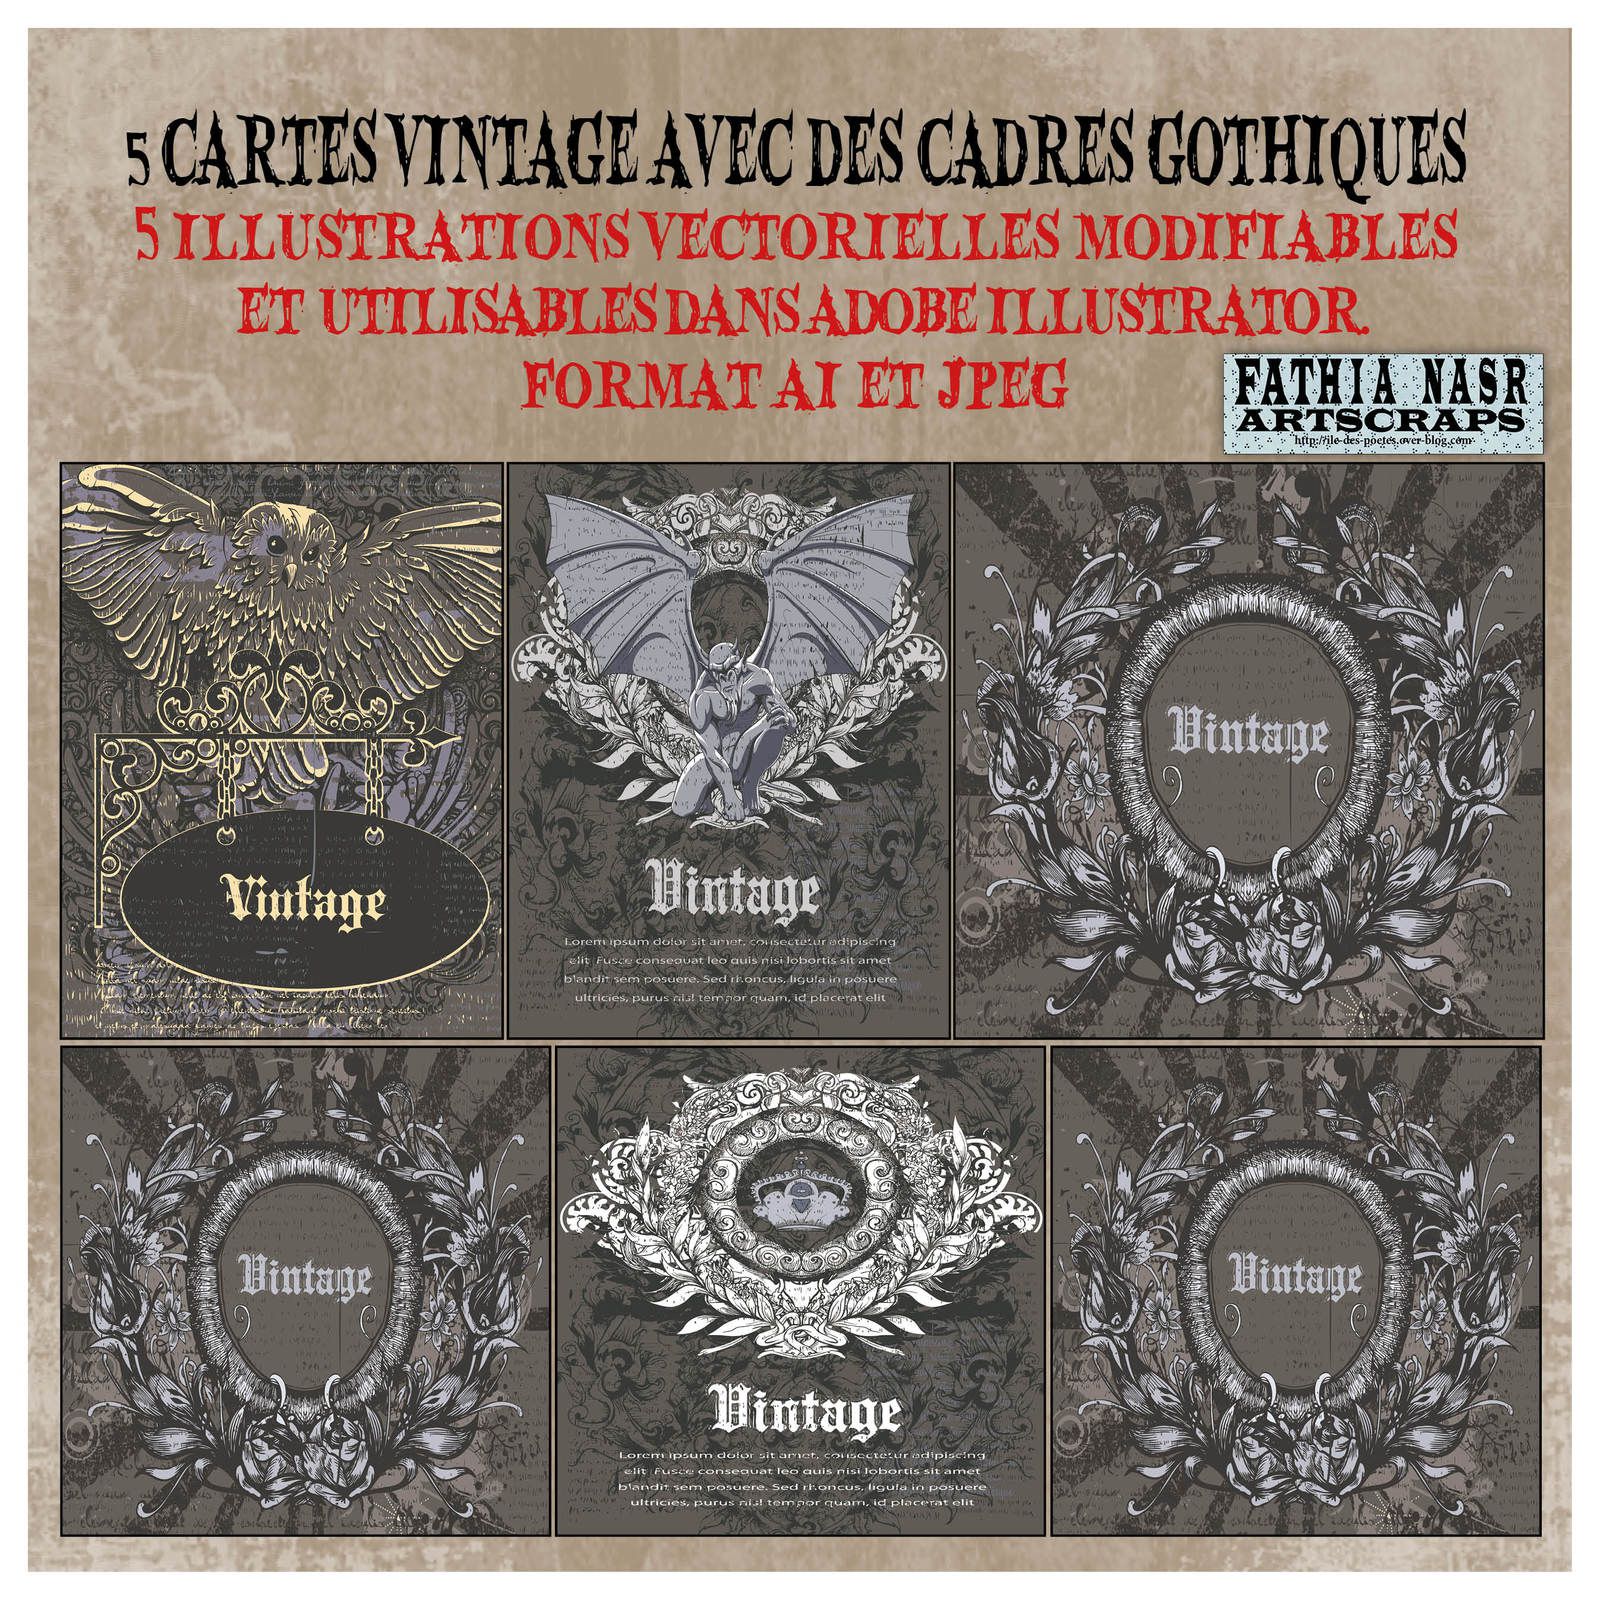 Gothic Cards, Cartes Gothiques, Vintage cards, Vintage Album, Scrapbook kit, Owl Vintage, Demon Vintage, Gothic cadres, Cadres gothiques, Illustrations Fathia NASR,